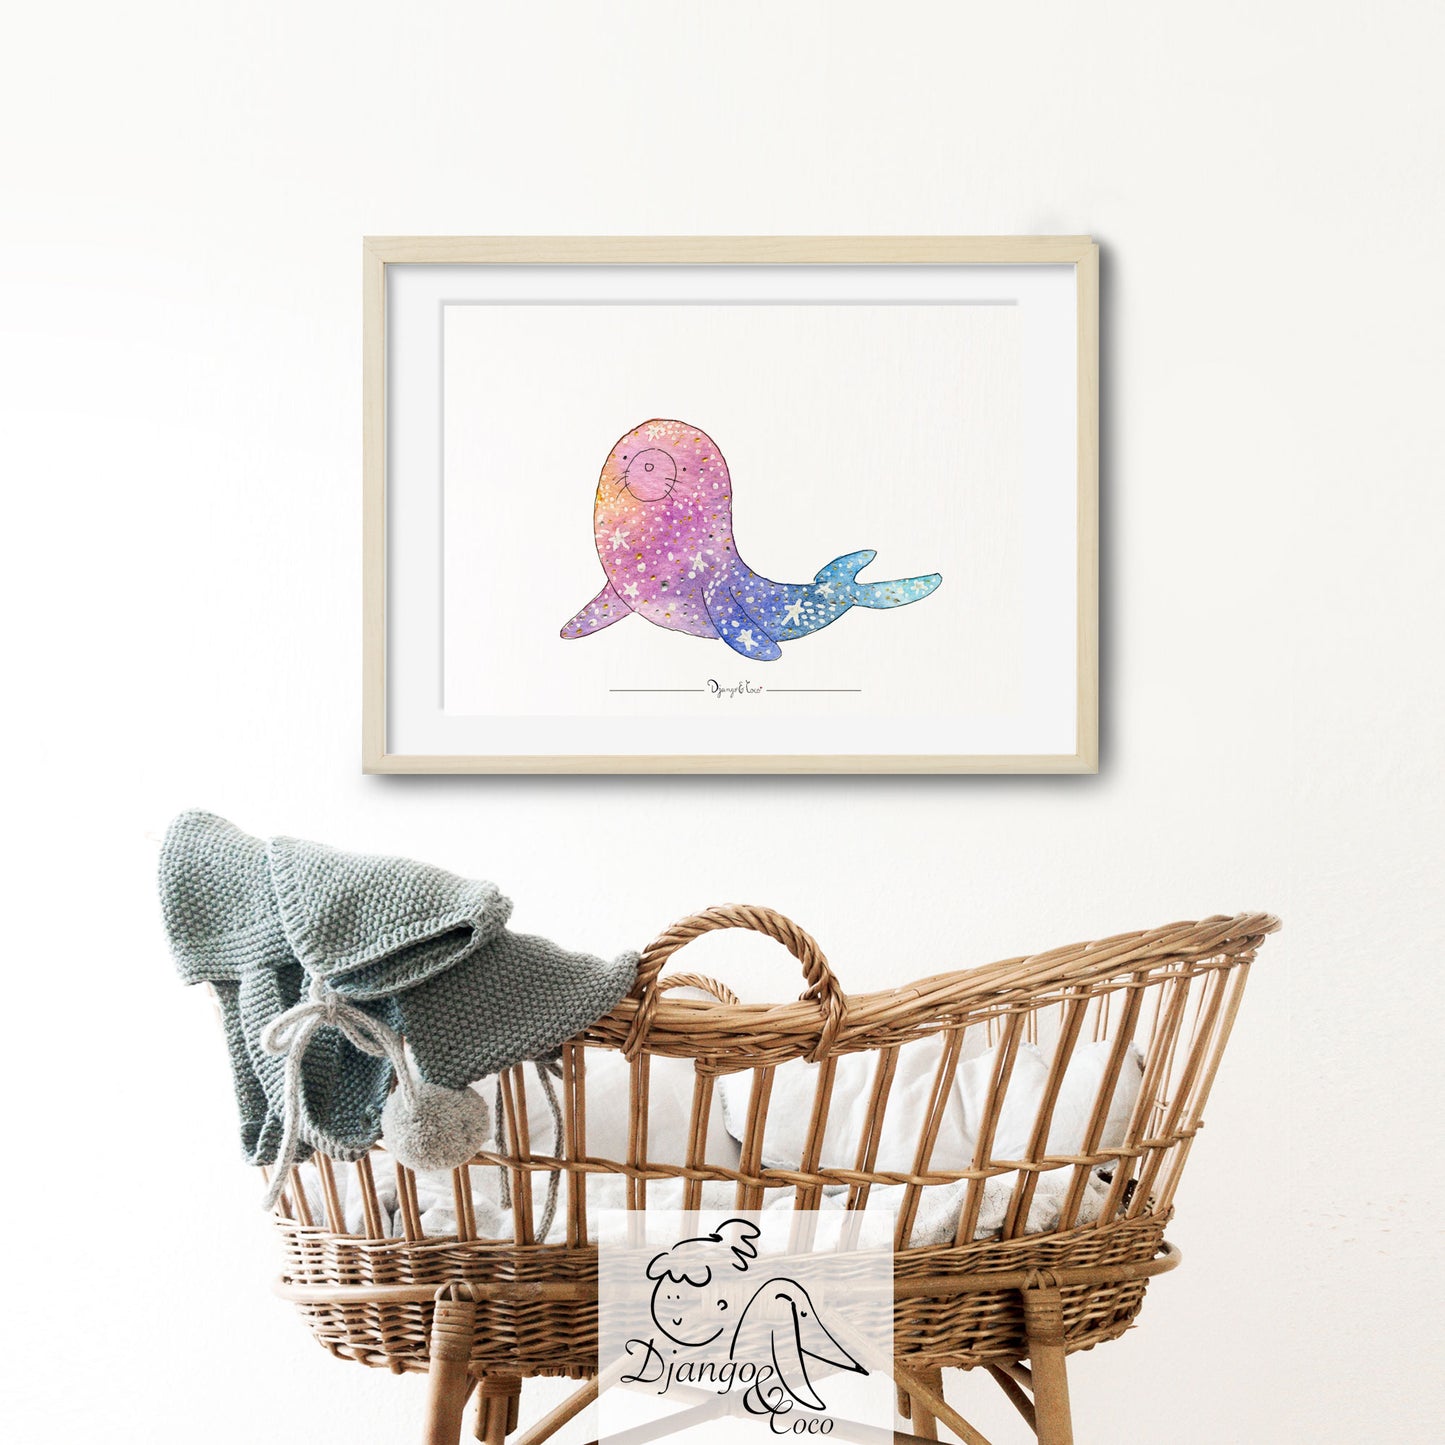 Framed art of a Galaxy seal illustration in a nursery